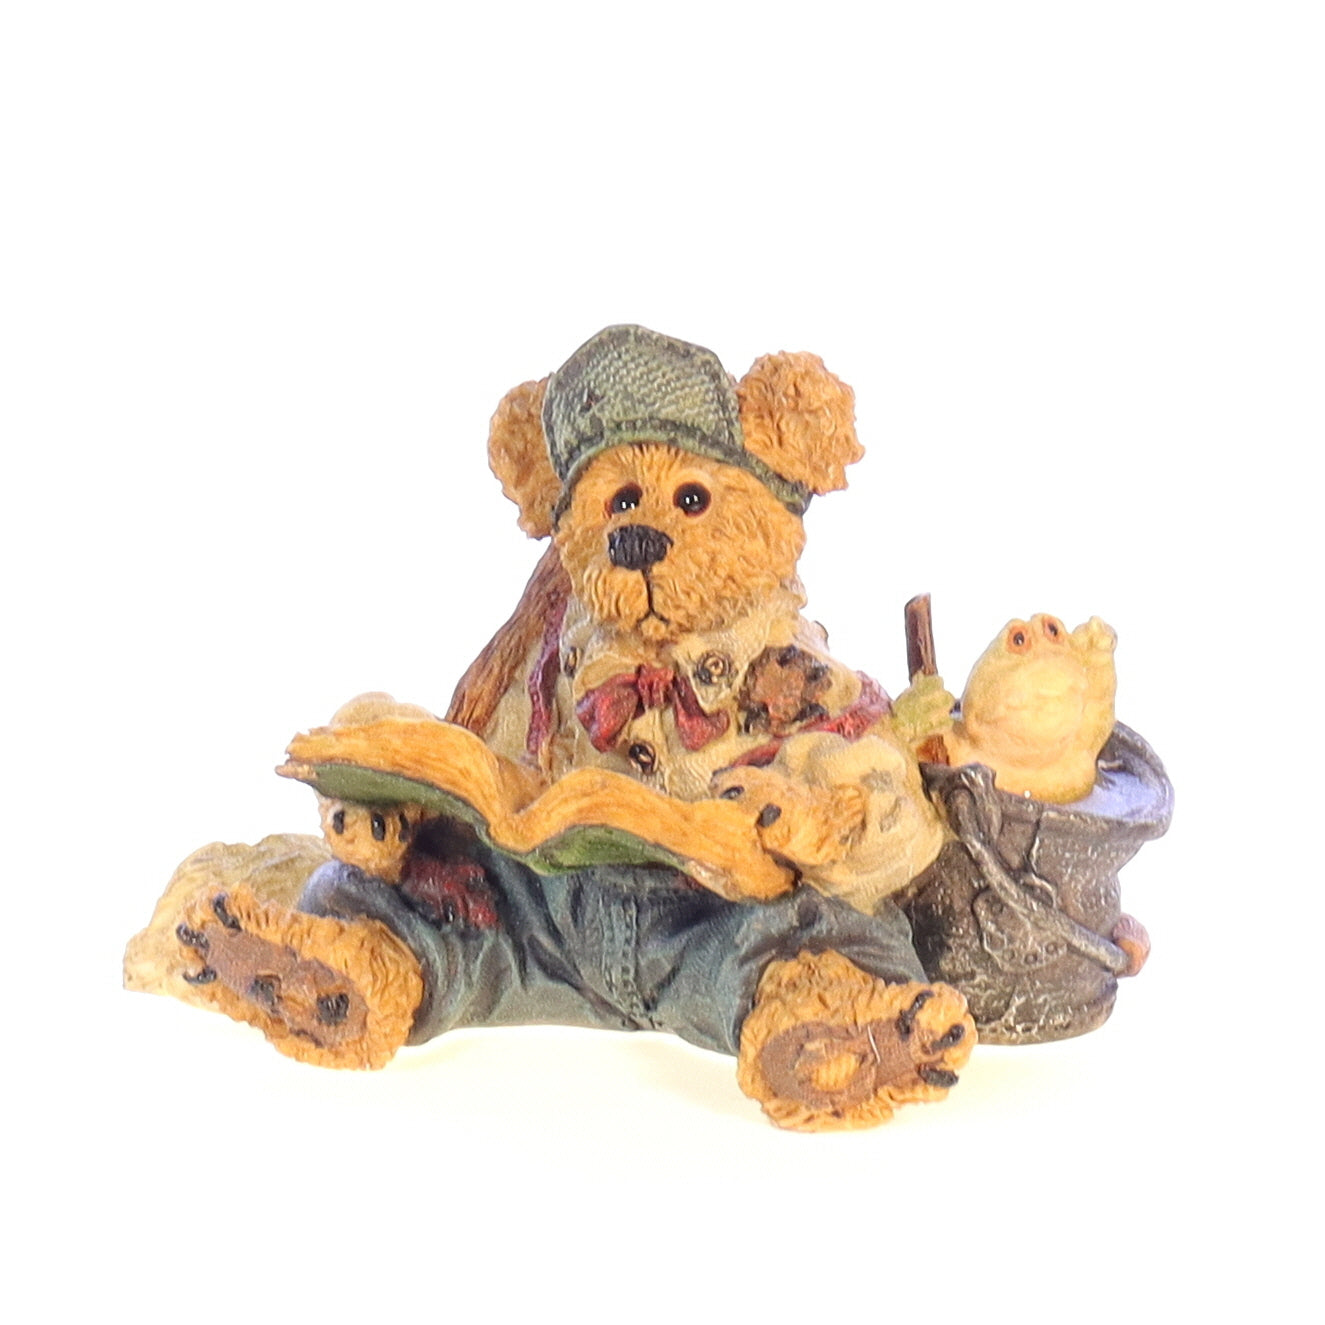 Boyds Bears Resin Figurine in Box Noah's Ark 2430 1999 2"